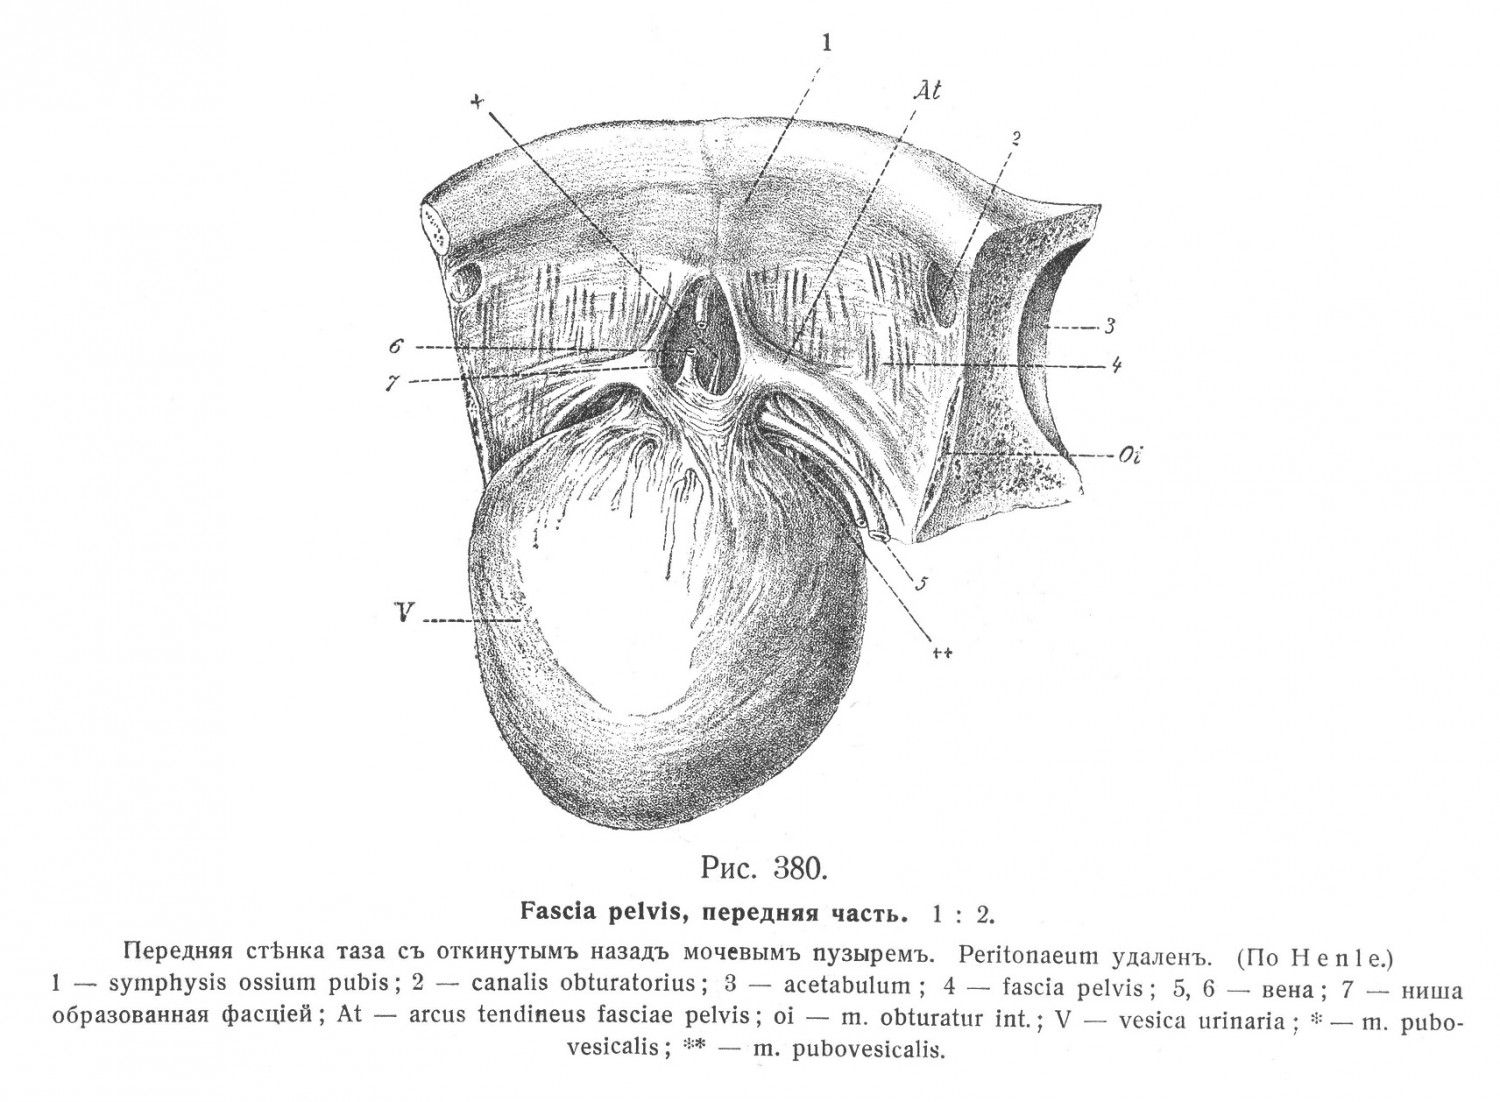 Передняя часть fasciae pelvis